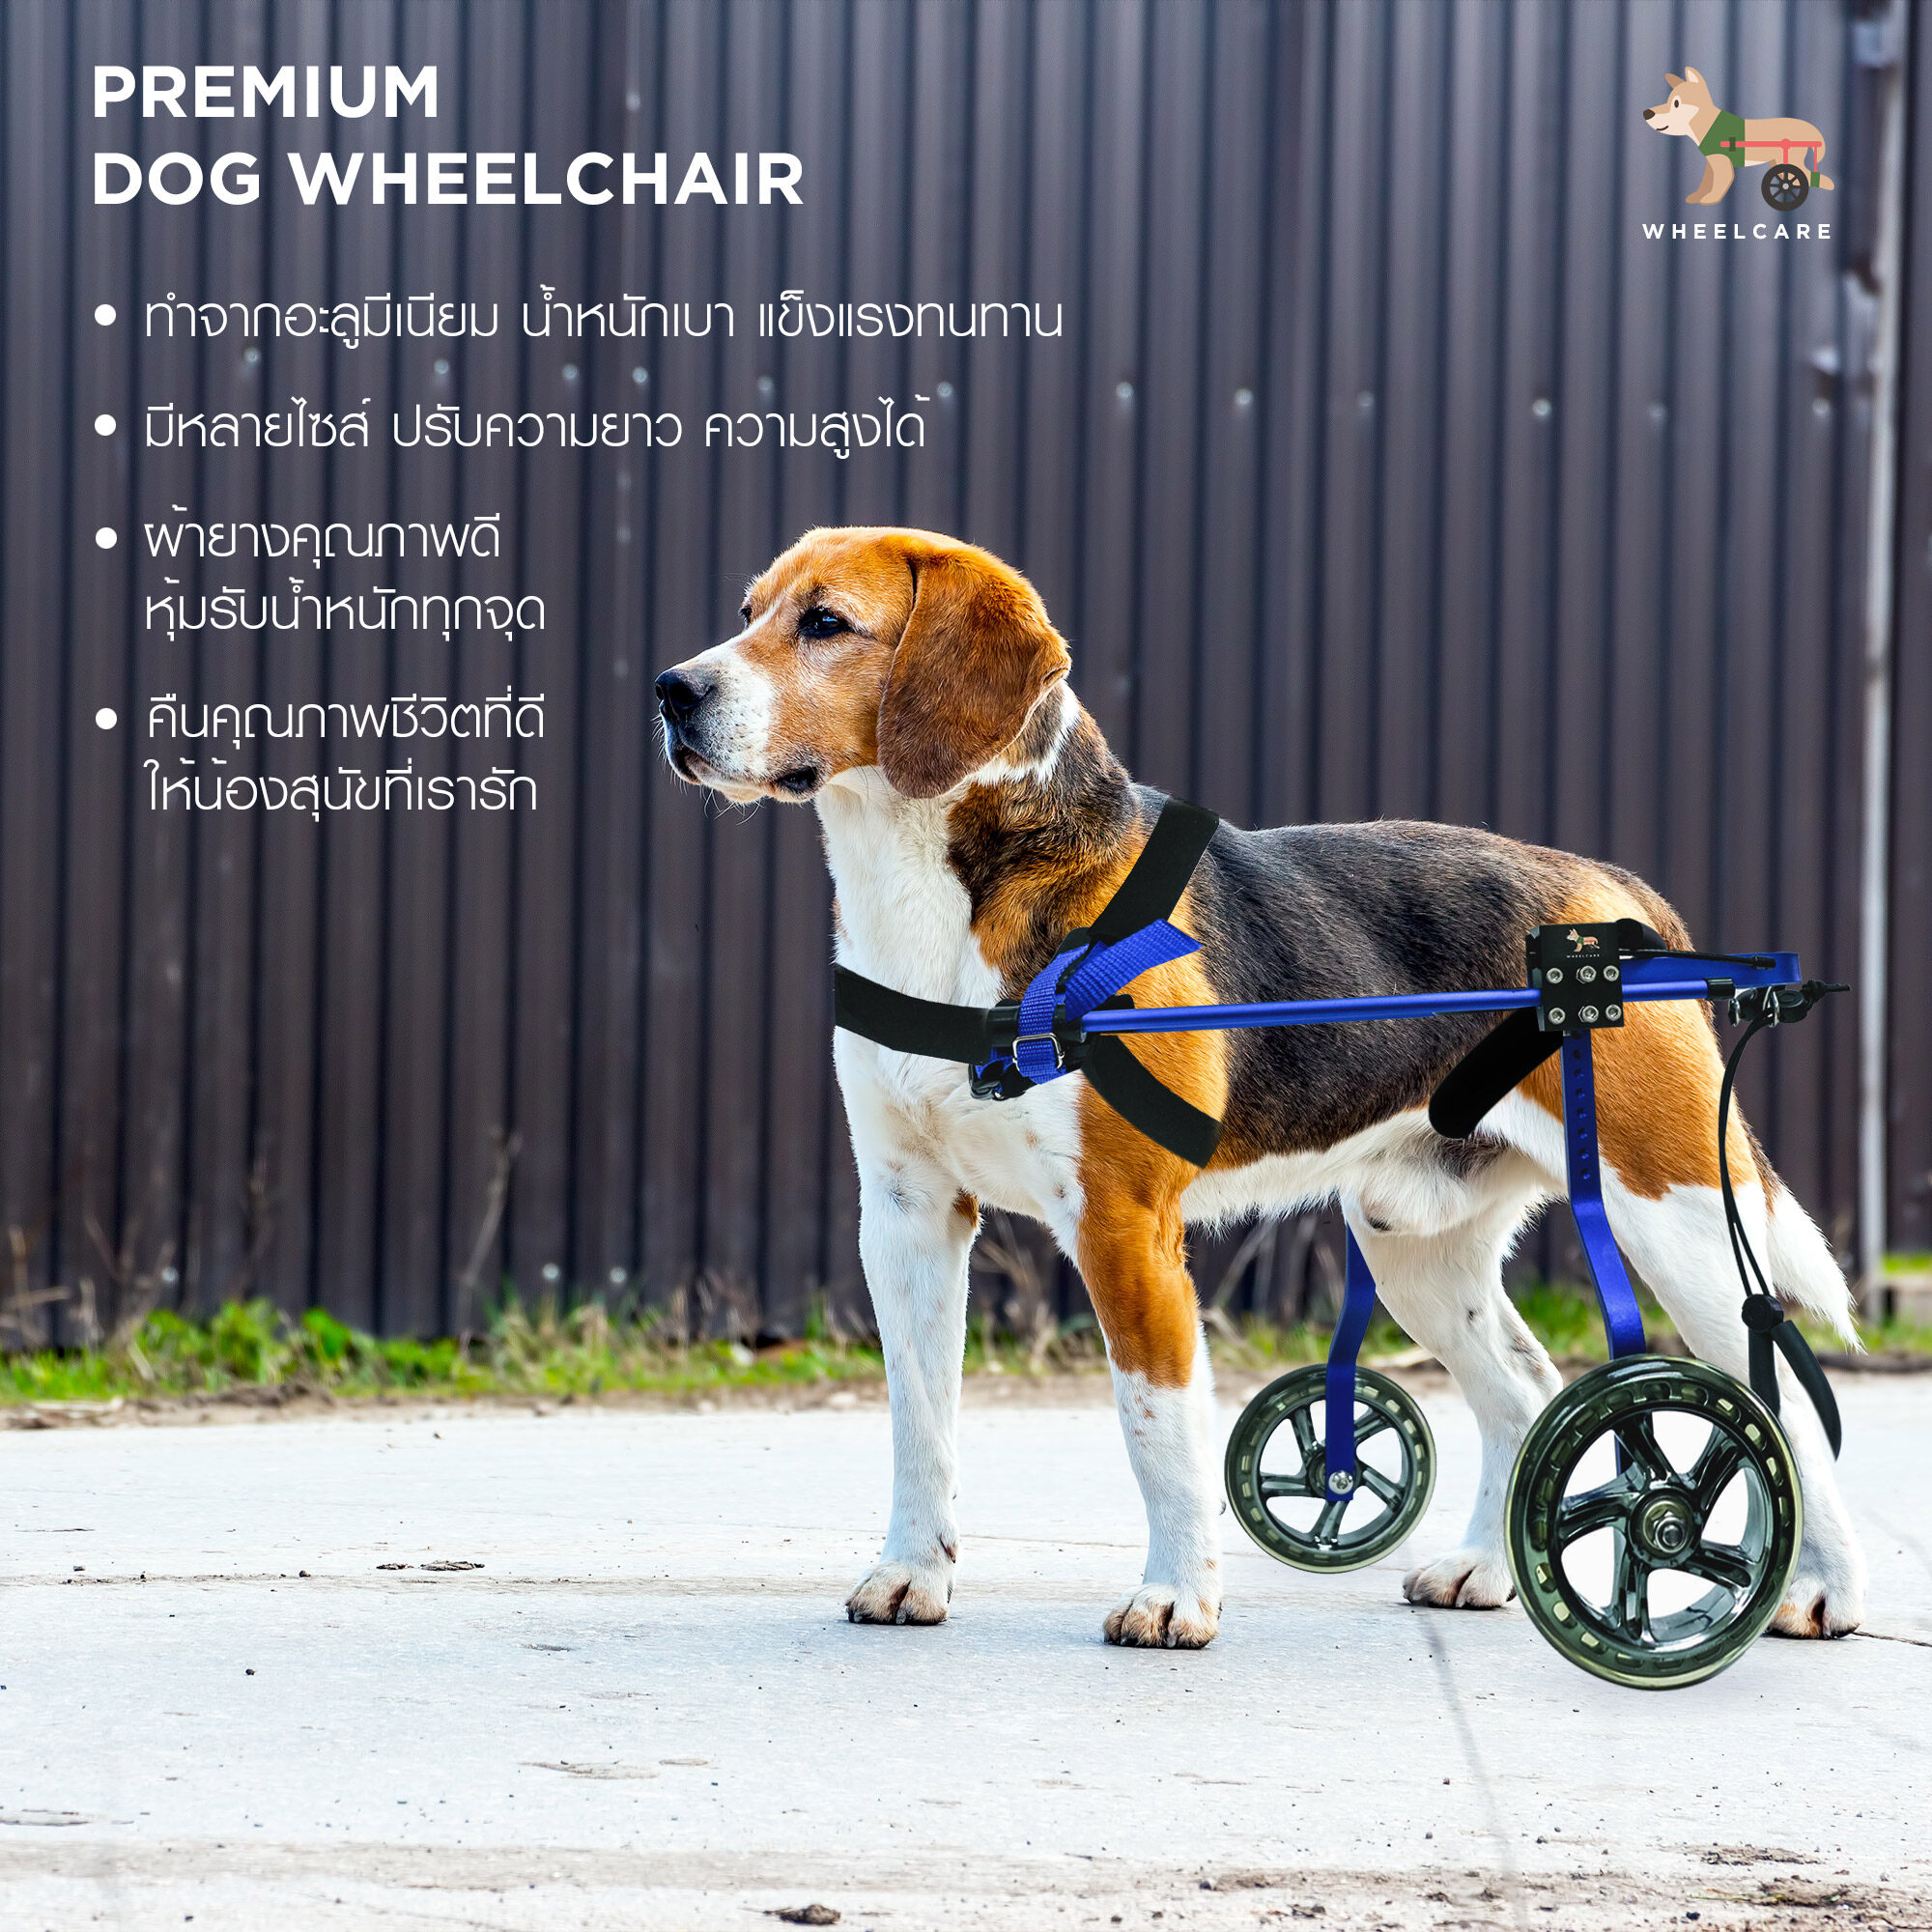 WHEELCARE - wheelchair dog วีลแชร์ สุนัข รถเข็น สำหรับสัตว์พิการขาหลัง ทำจากอลูมิเนียมอัลลอยด์ คุณภาพสูง มีหลายขนาดปรับได้ตามรูปร่าง (สีน้ำเงิน WB-1